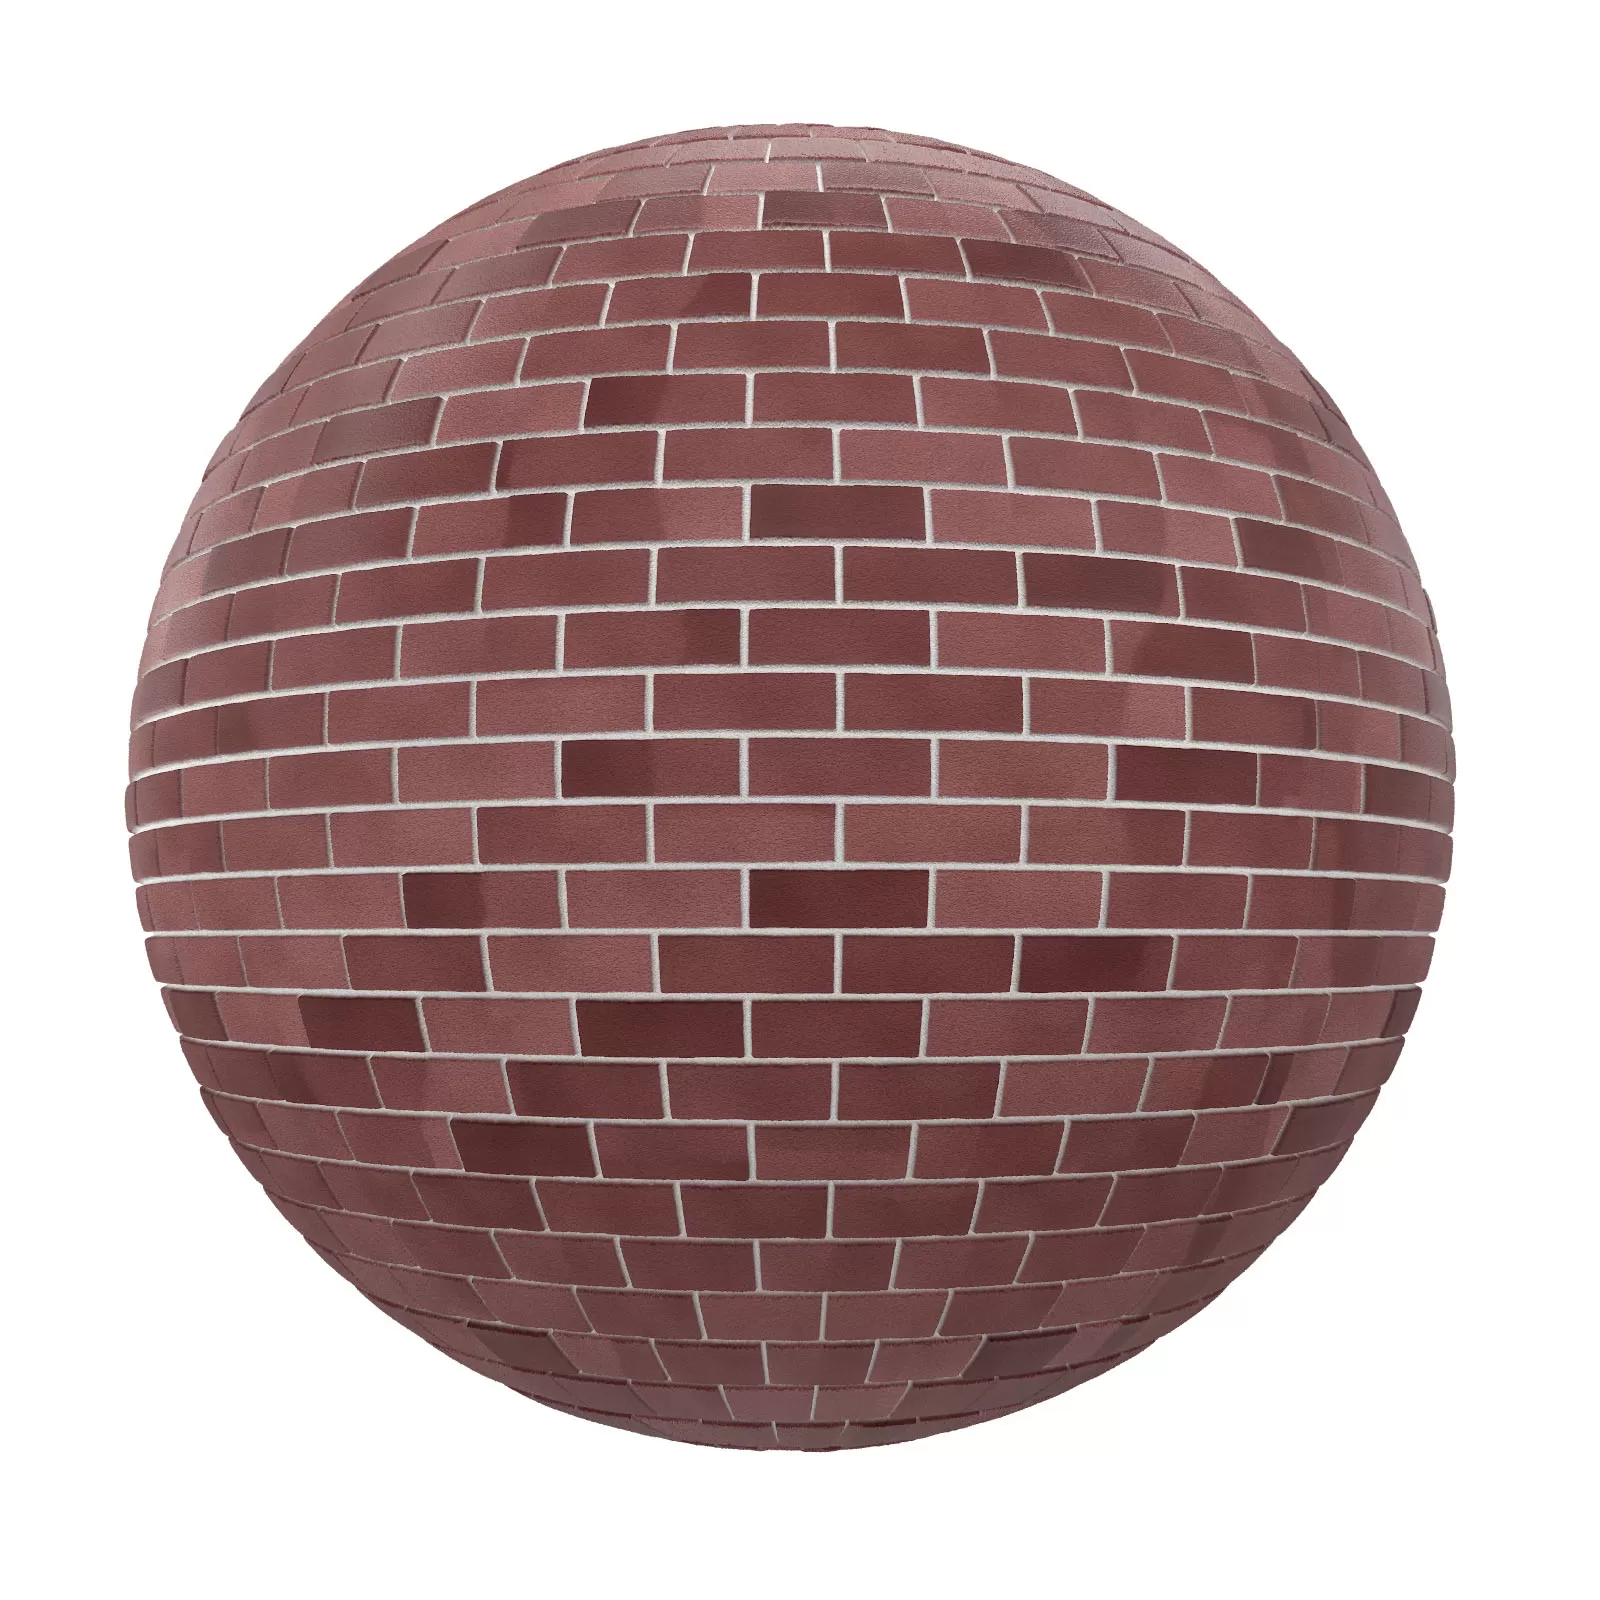 PBR CGAXIS TEXTURES – BRICK – Red Brick Wall 16